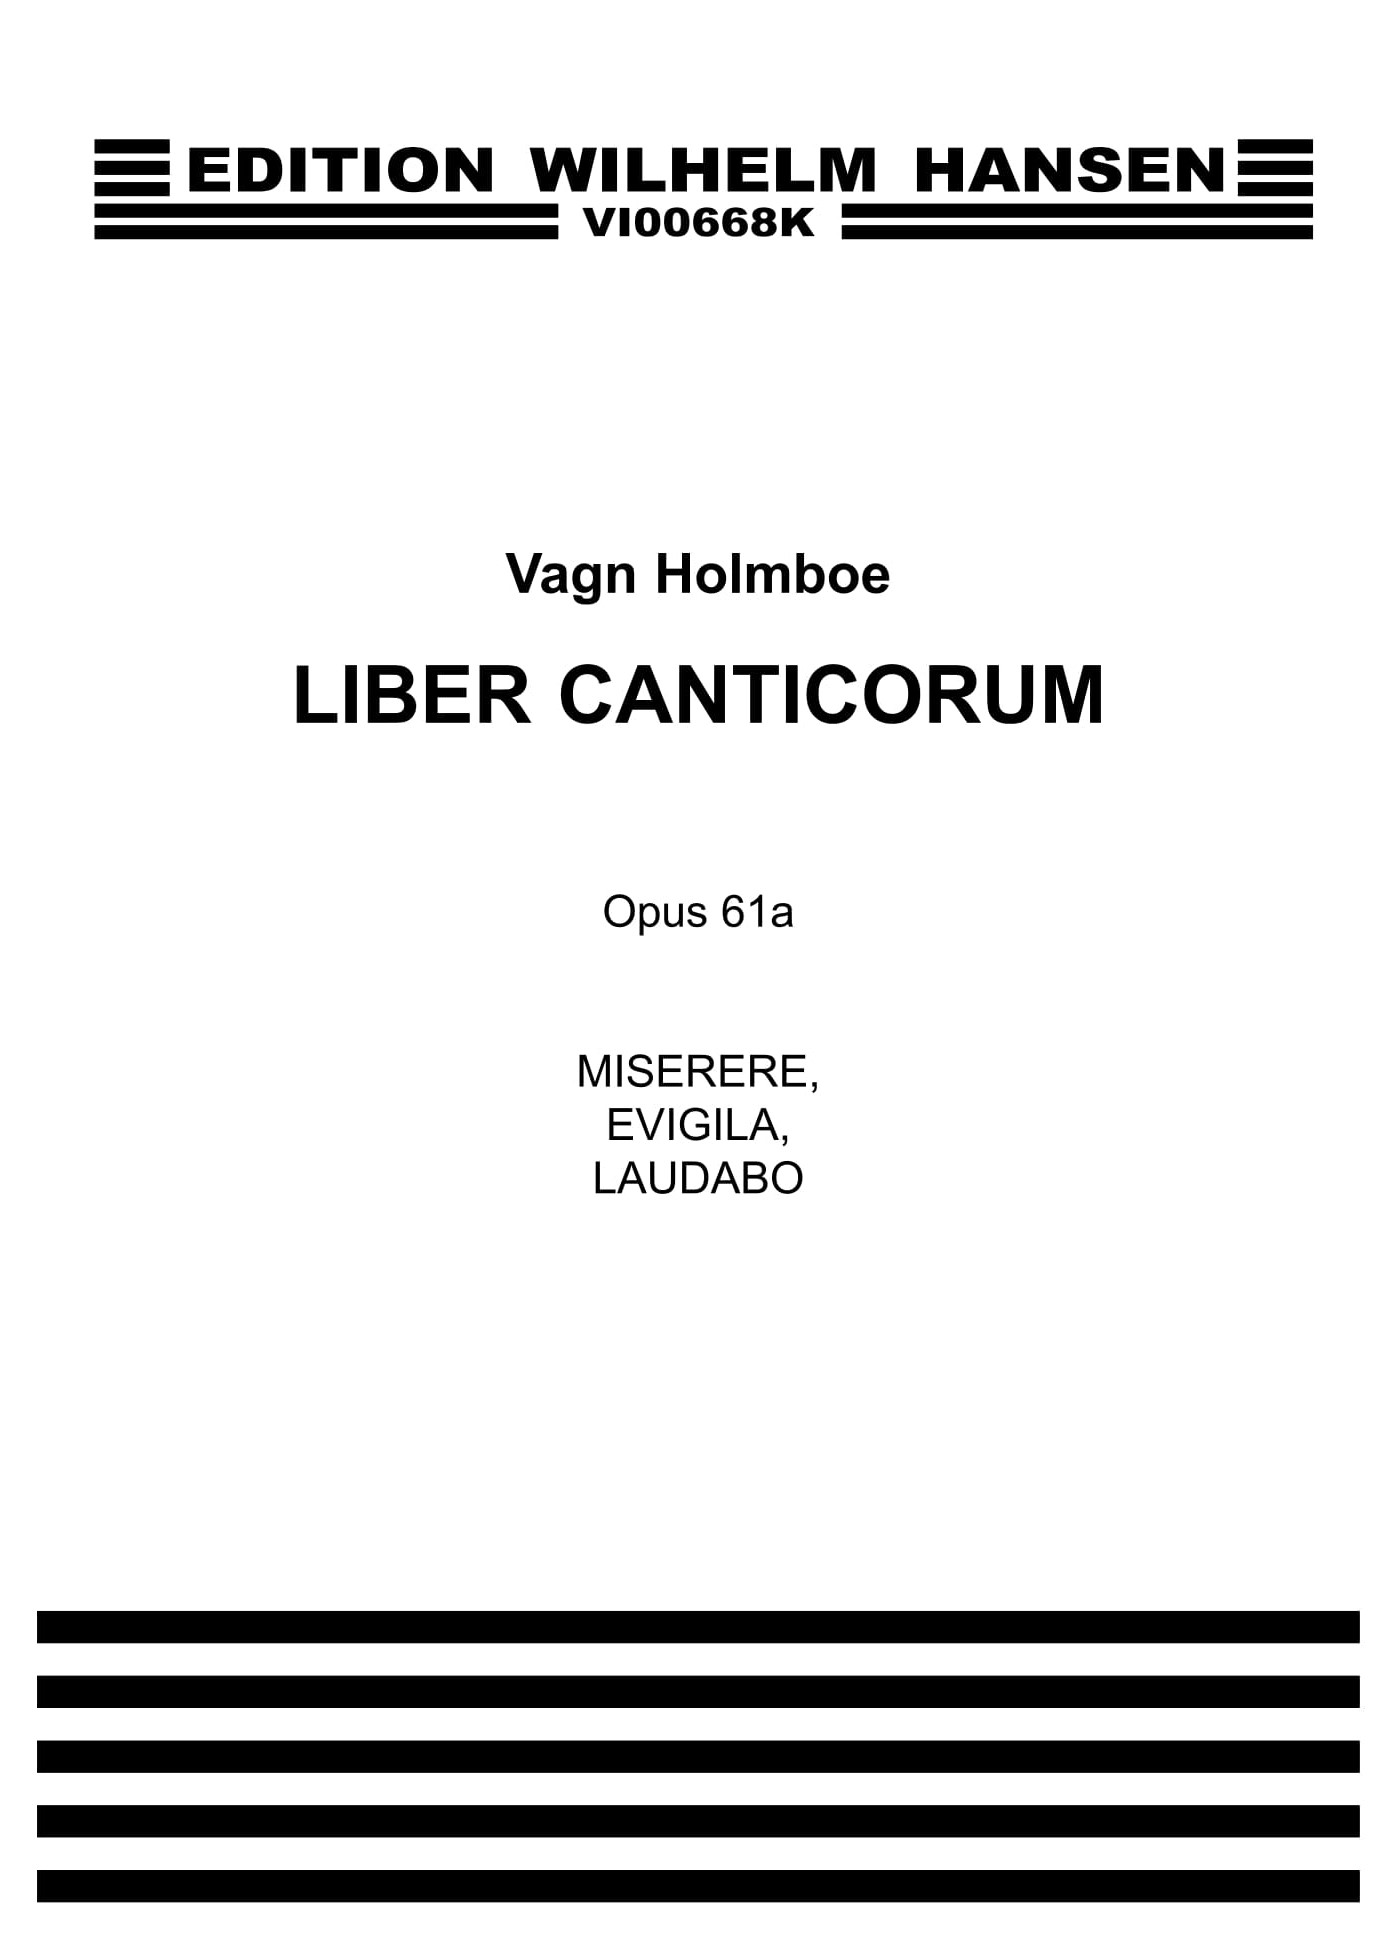 Vagn Holmboe: Miserere - Evigila - Laudabo Op. 61a: SATB: Vocal Score